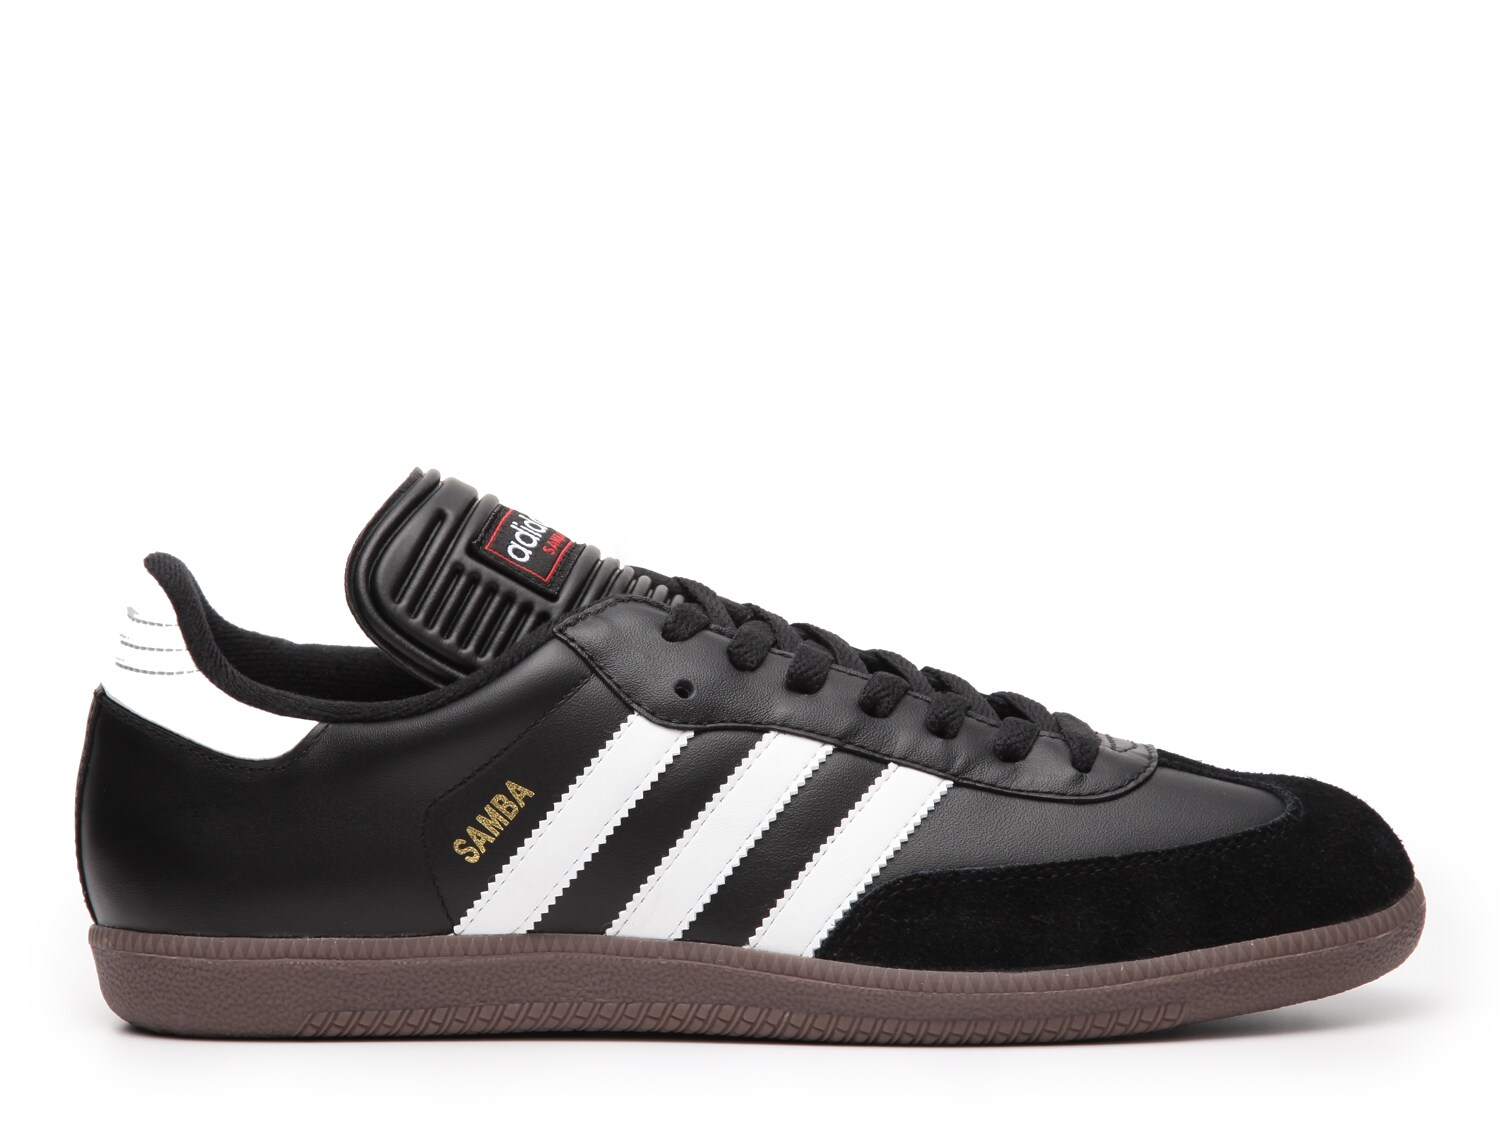 adidas Samba Classic Indoor Soccer Shoe 